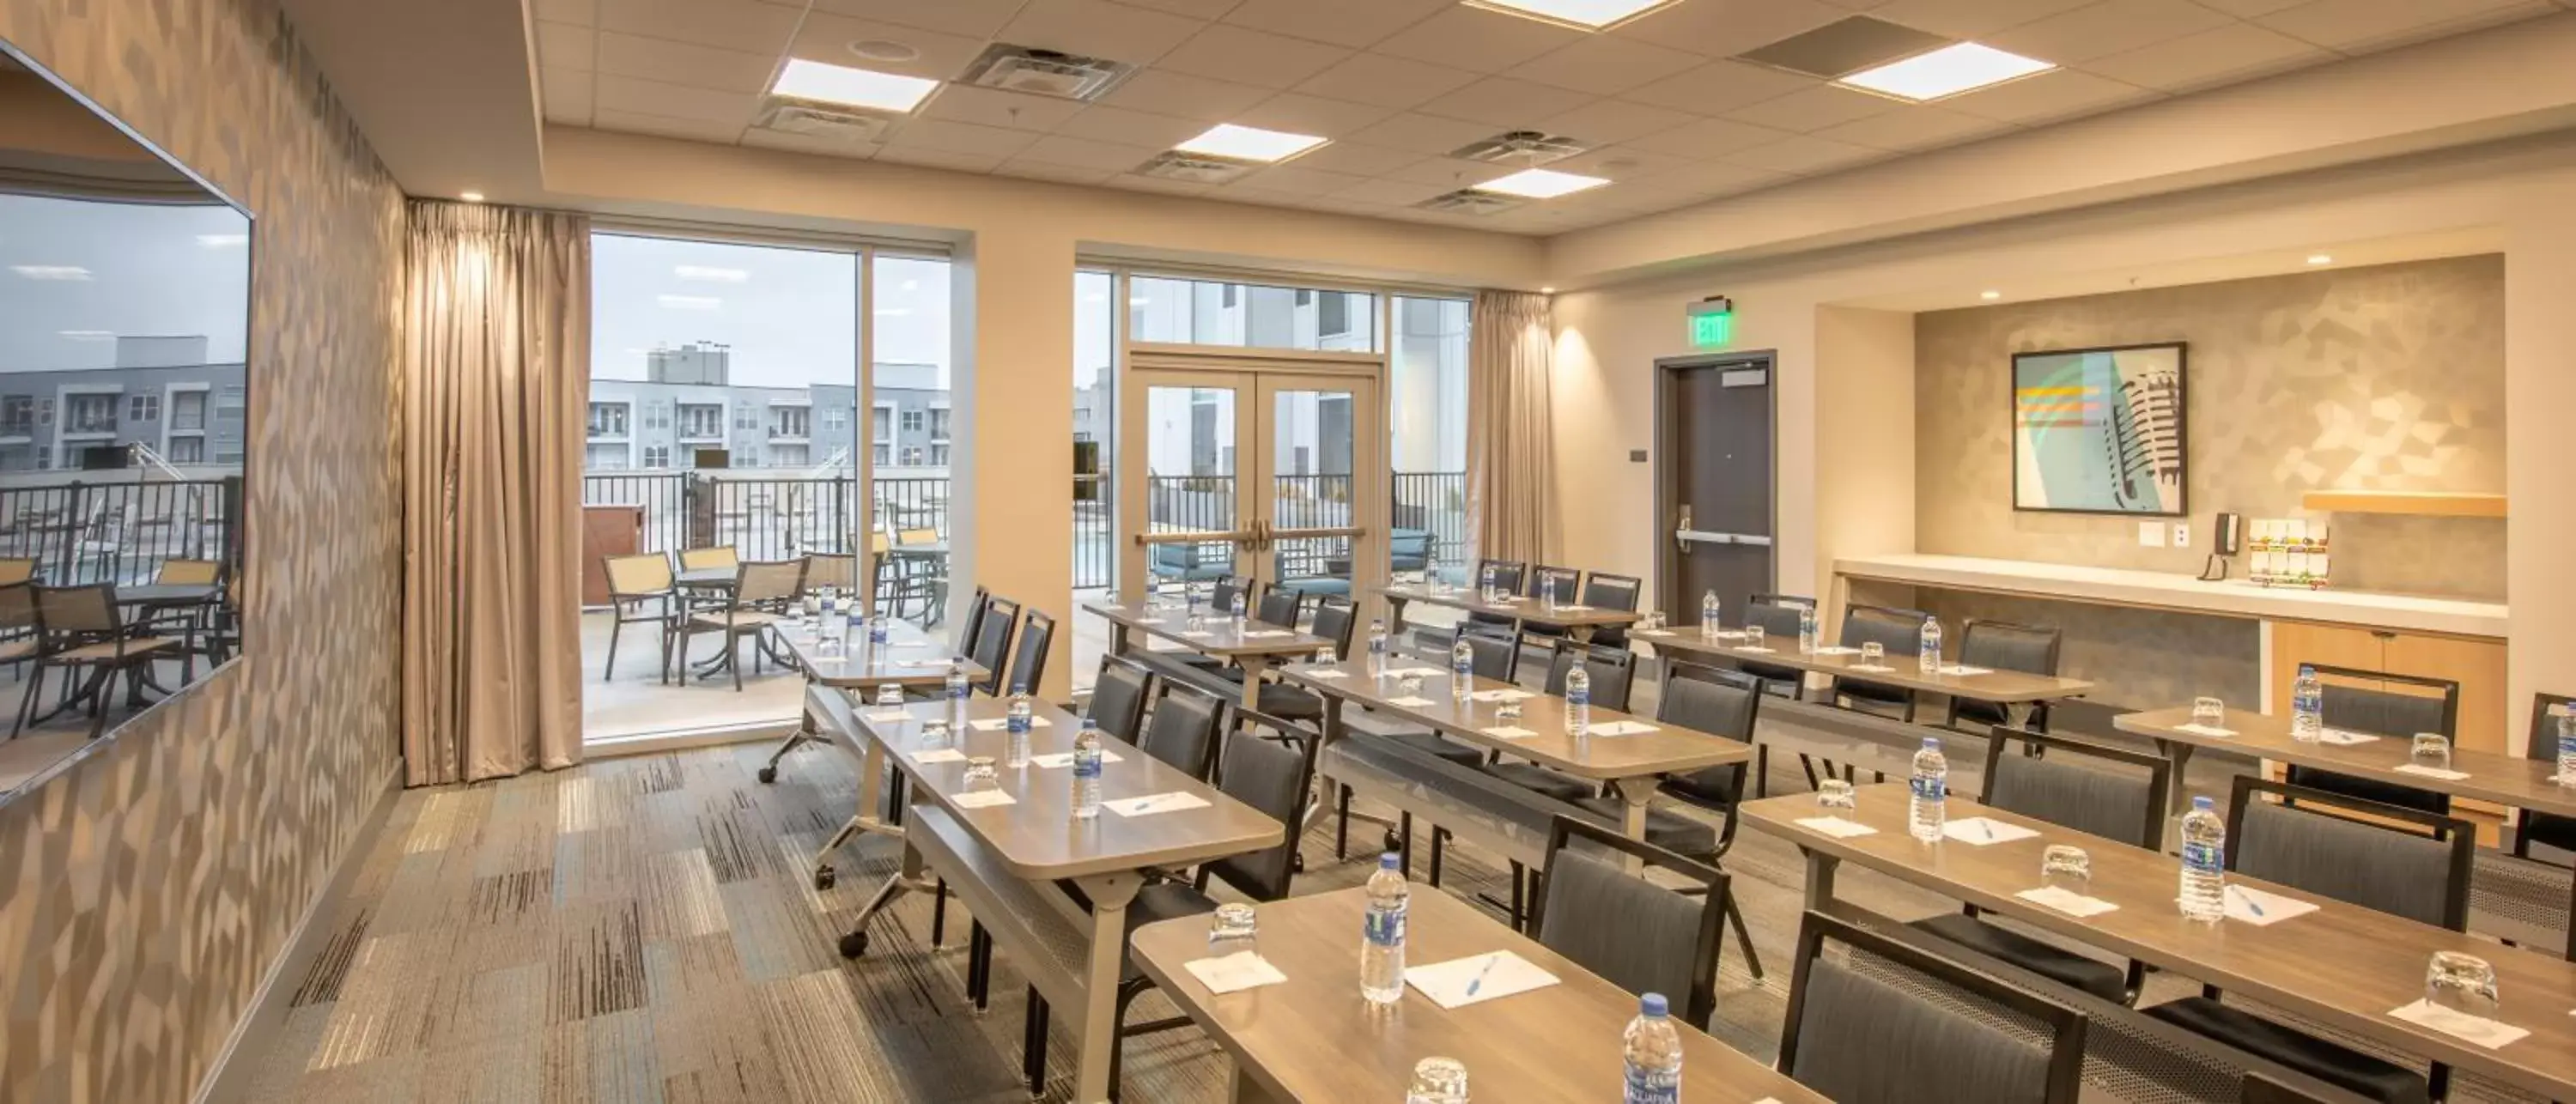 Banquet/Function facilities, Restaurant/Places to Eat in Hyatt House Nashville at Vanderbilt